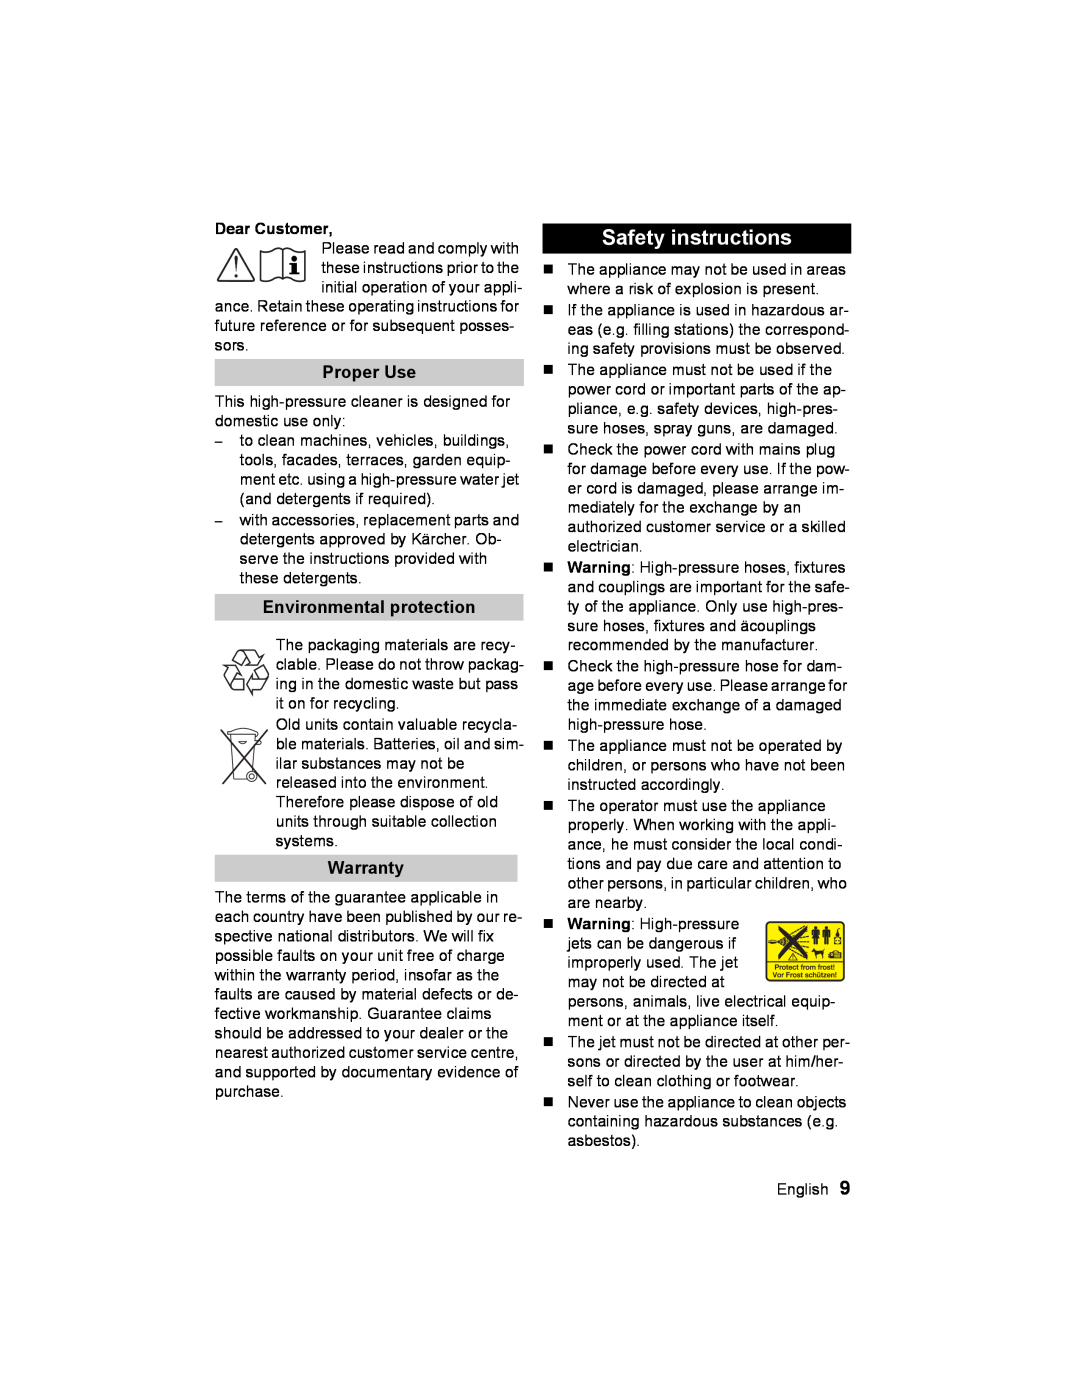 Karcher K2.93 manual Safety instructions, Proper Use, Environmental protection, Warranty 